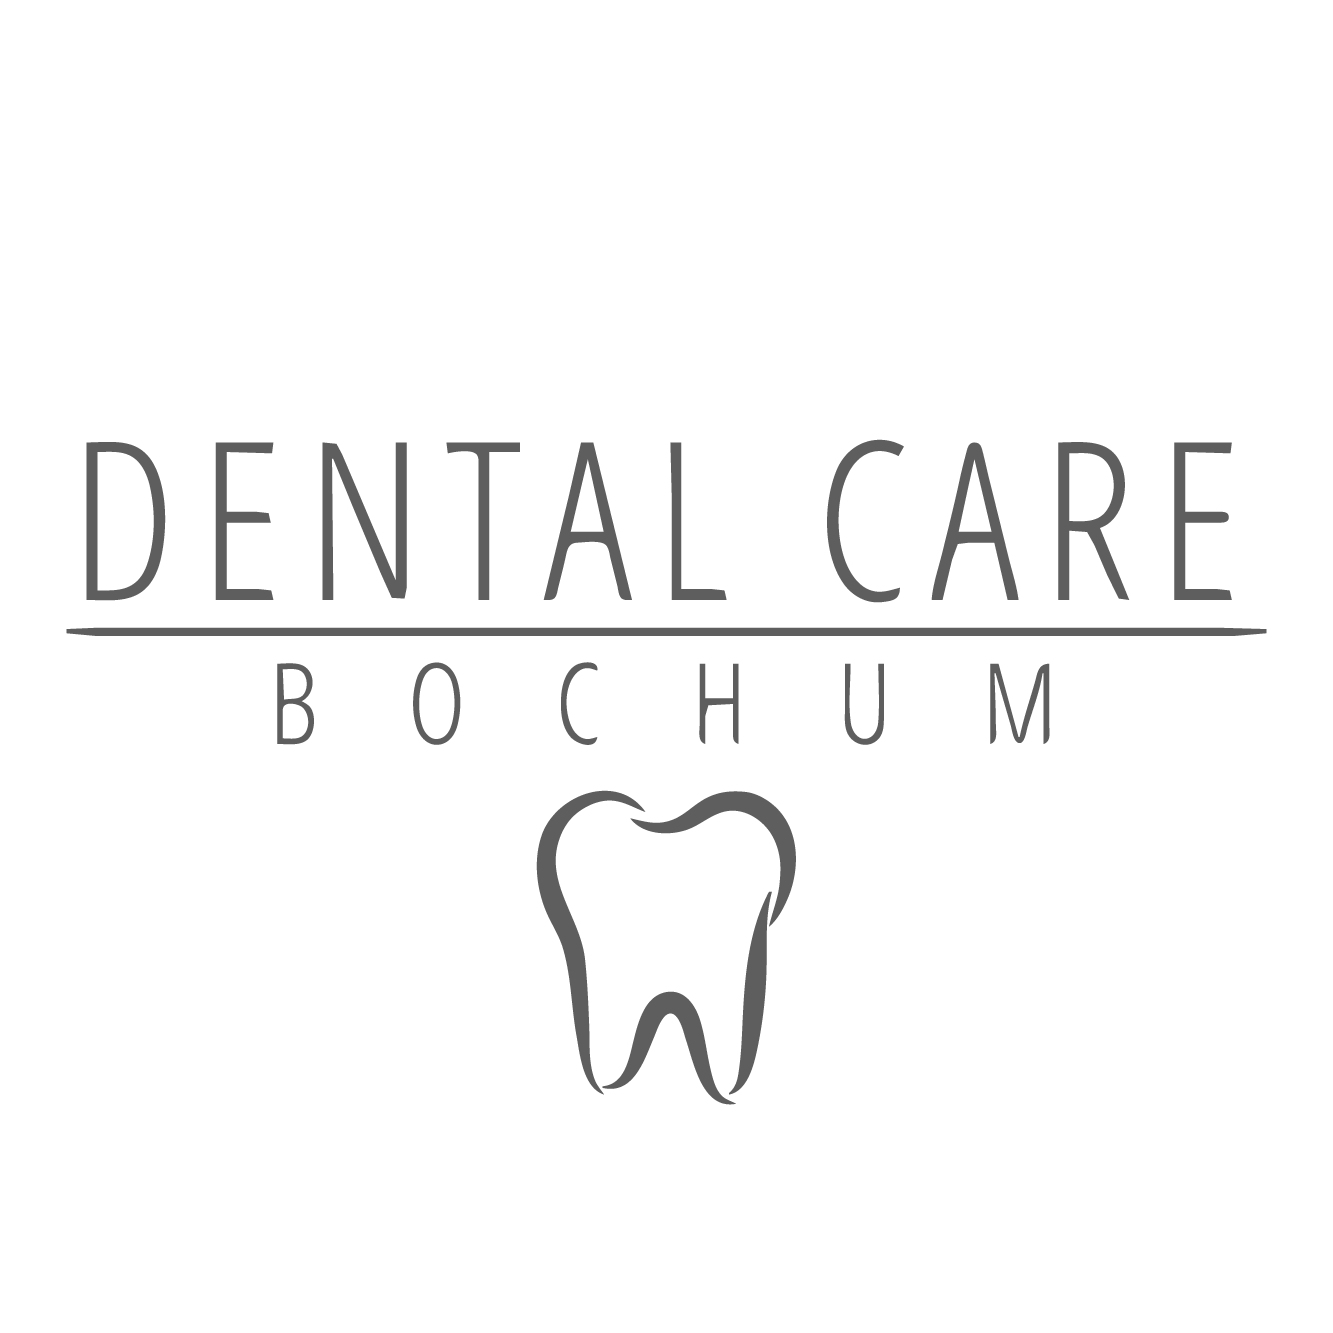 Dentalcare Bochum